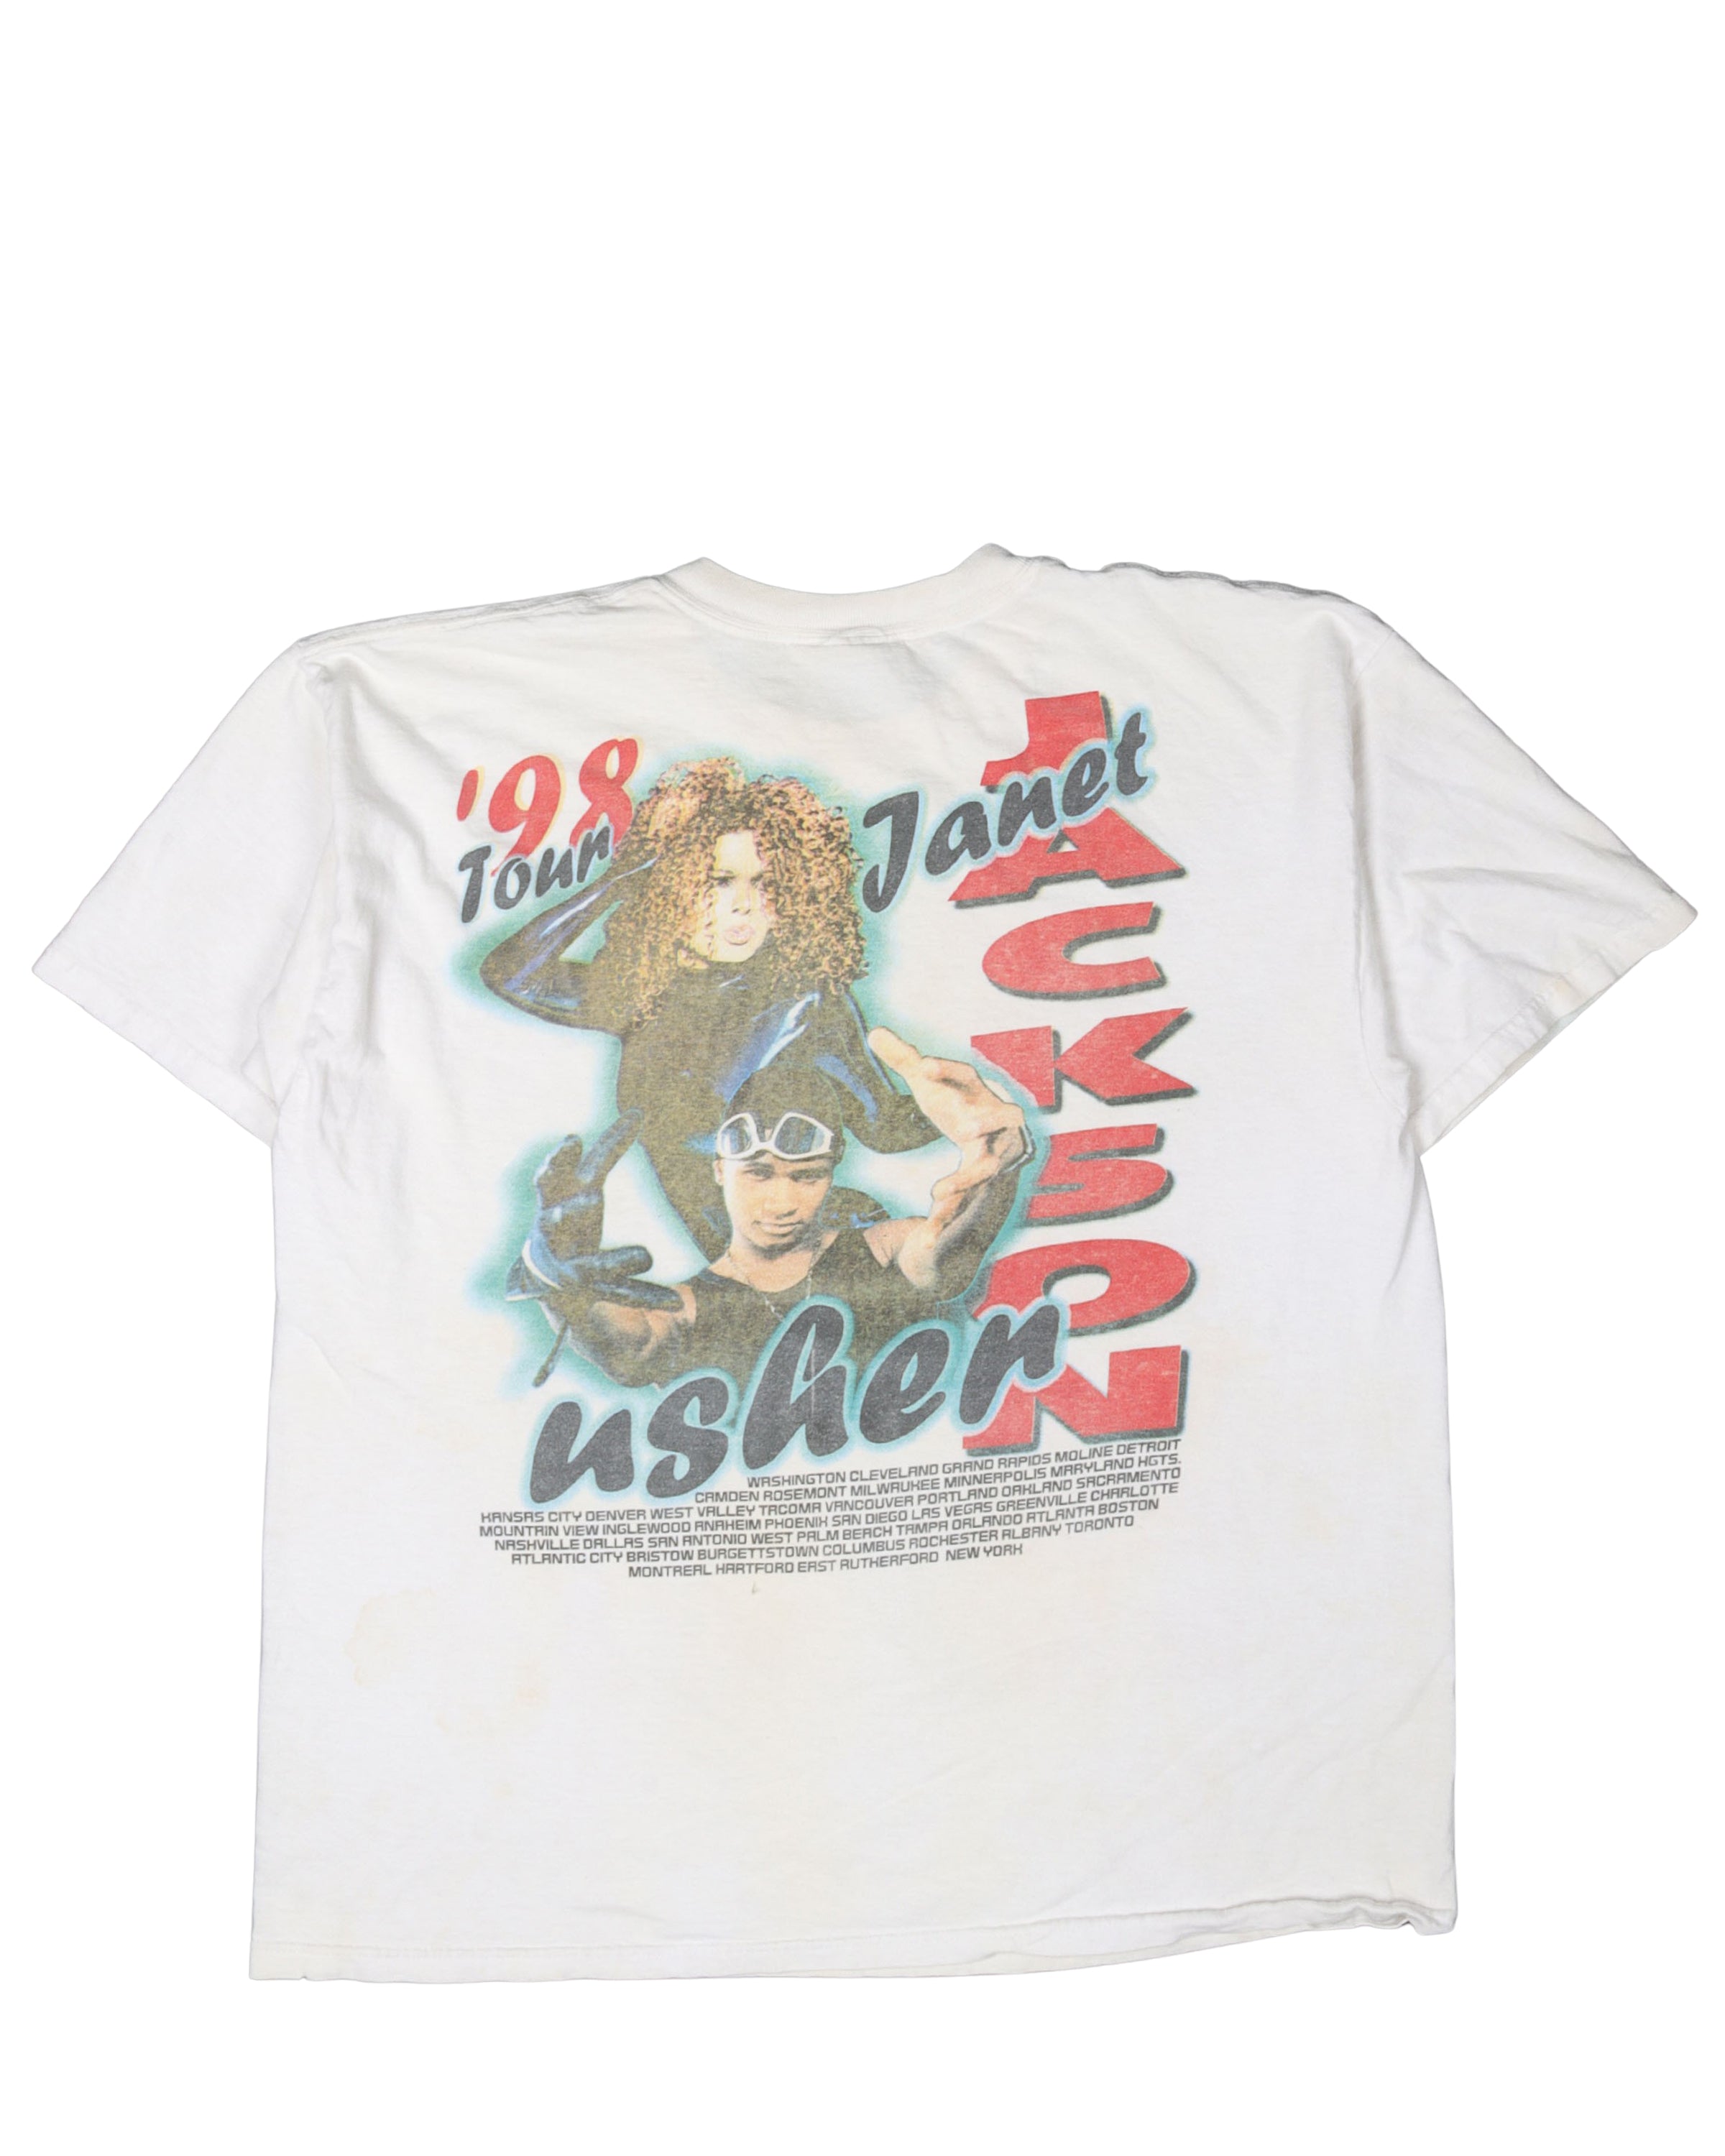 Janet Jackson 98' Tour T-Shirt